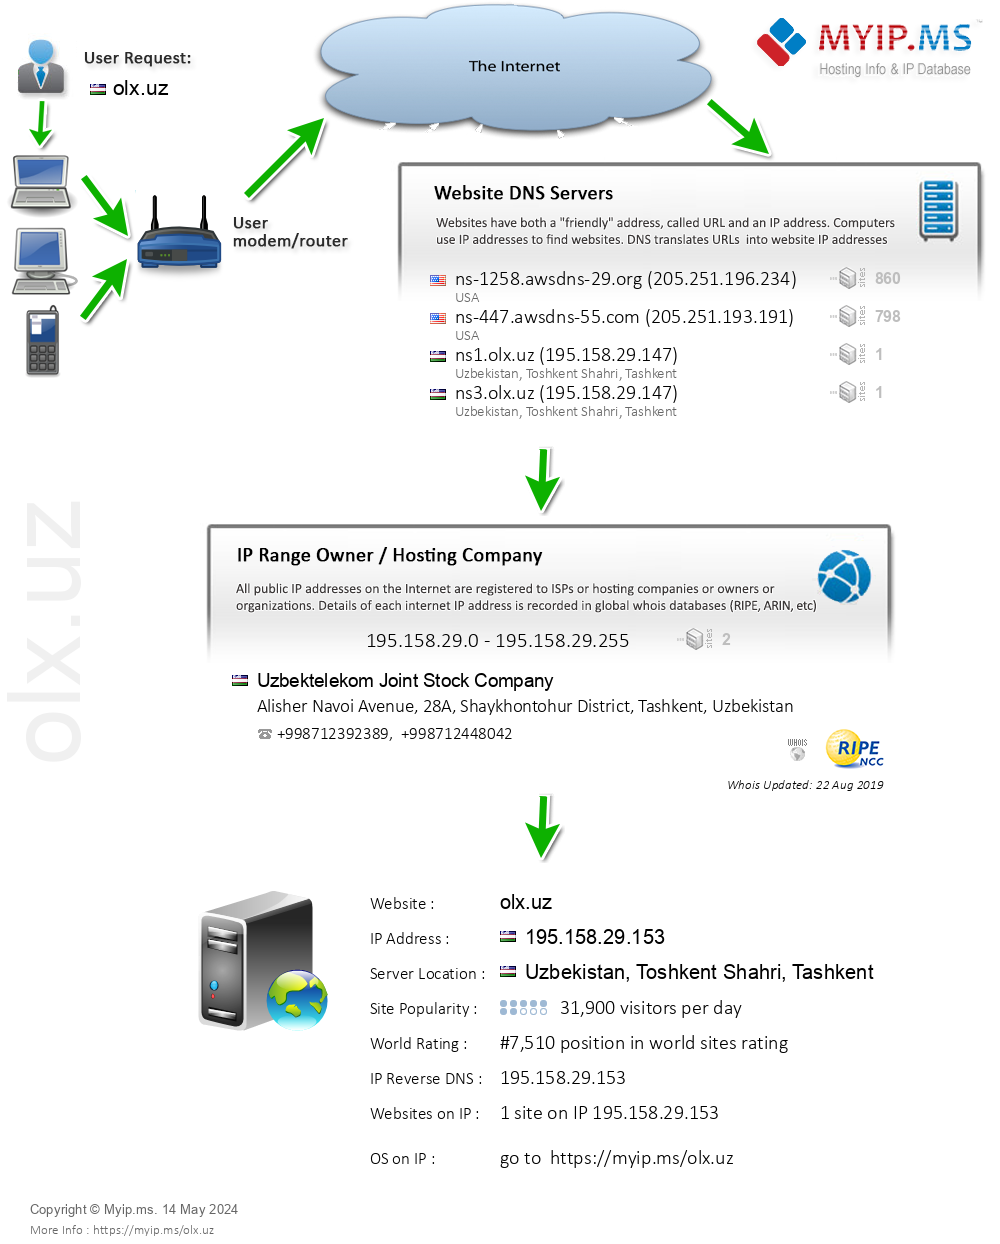 Olx.uz - Website Hosting Visual IP Diagram